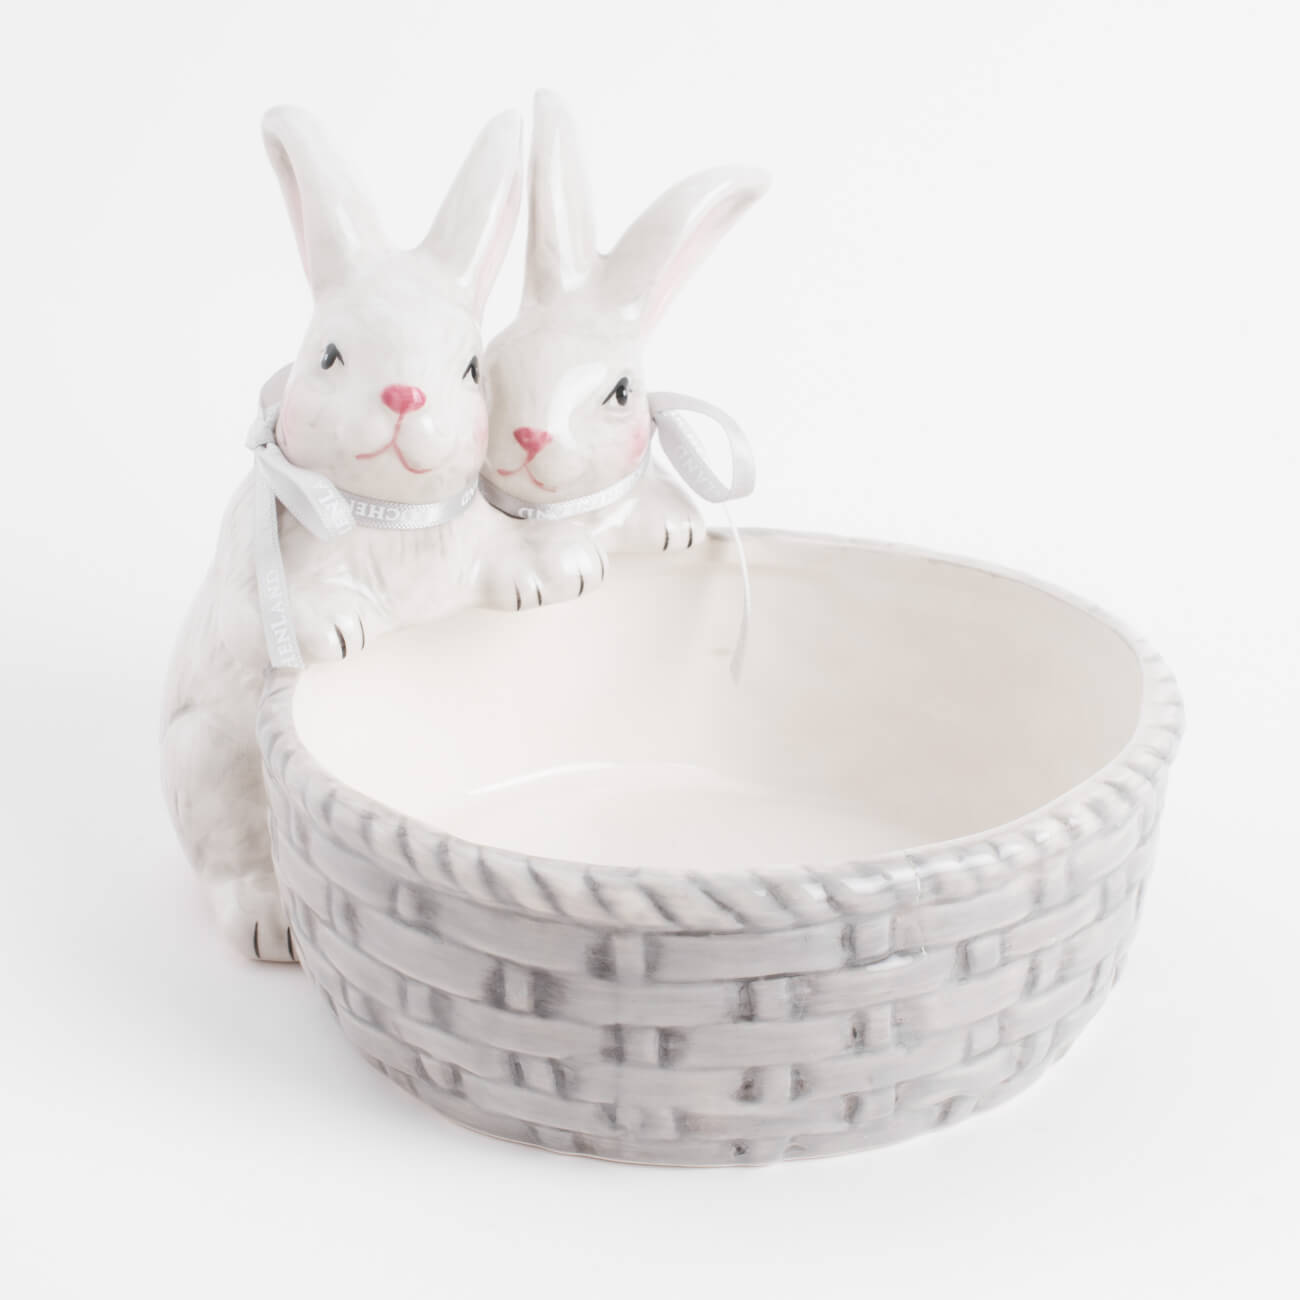 Конфетница, 16х14 см, керамика, серо-молочная, Кролики, Pure Easter набор для соли и перца 10 см фарфор p белый кролики с ами pure easter